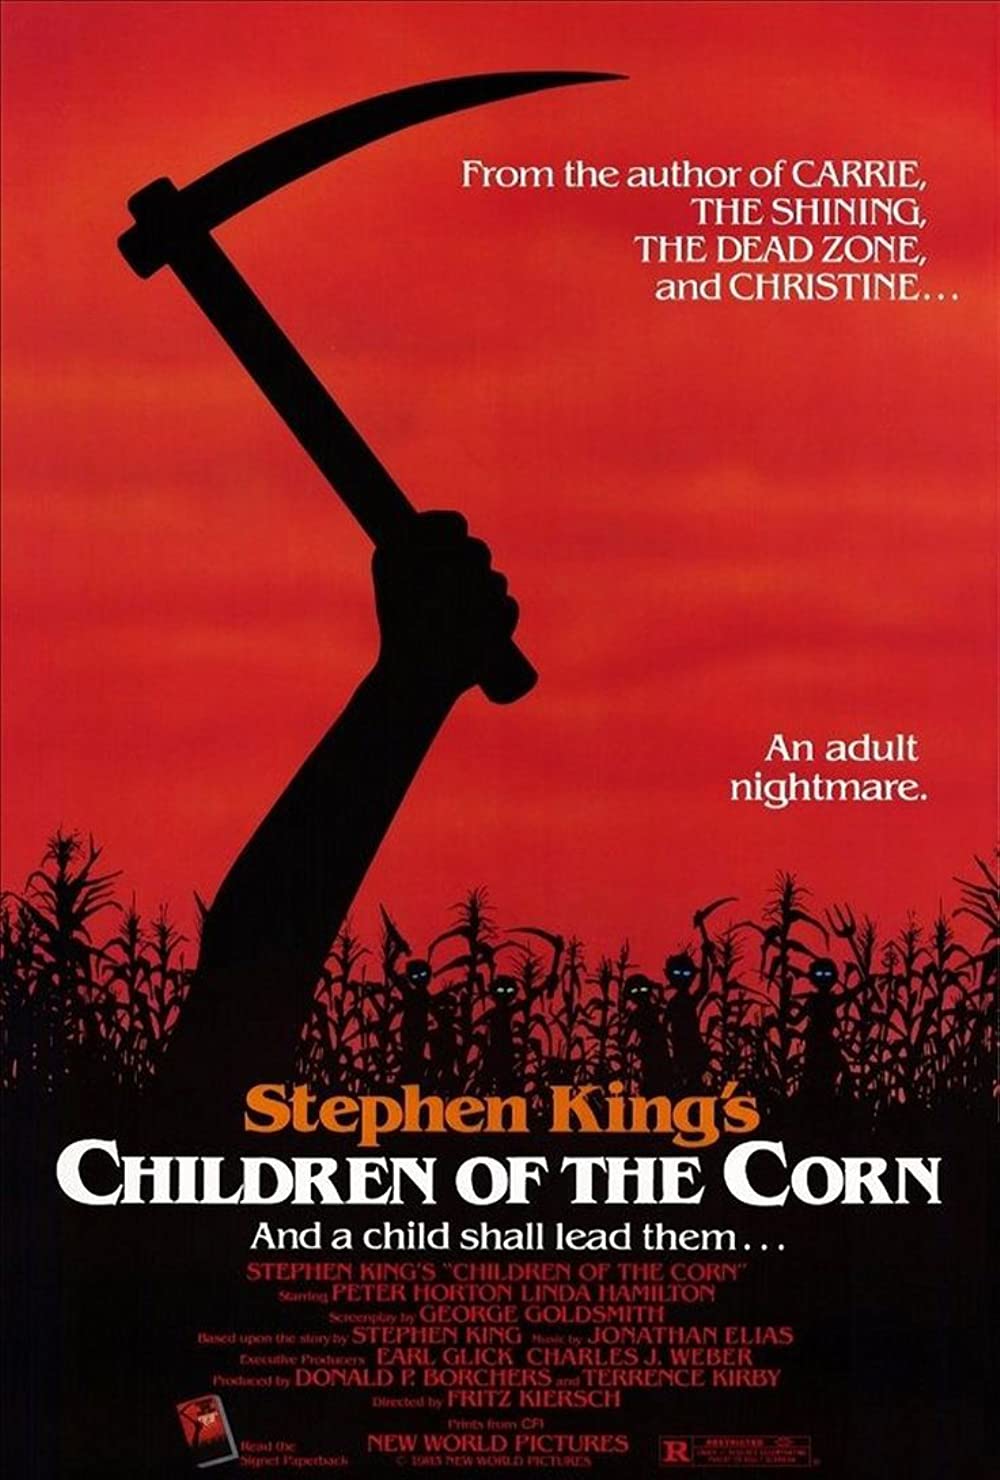 Film poster for CHILDREN OF THE CORN (1984)